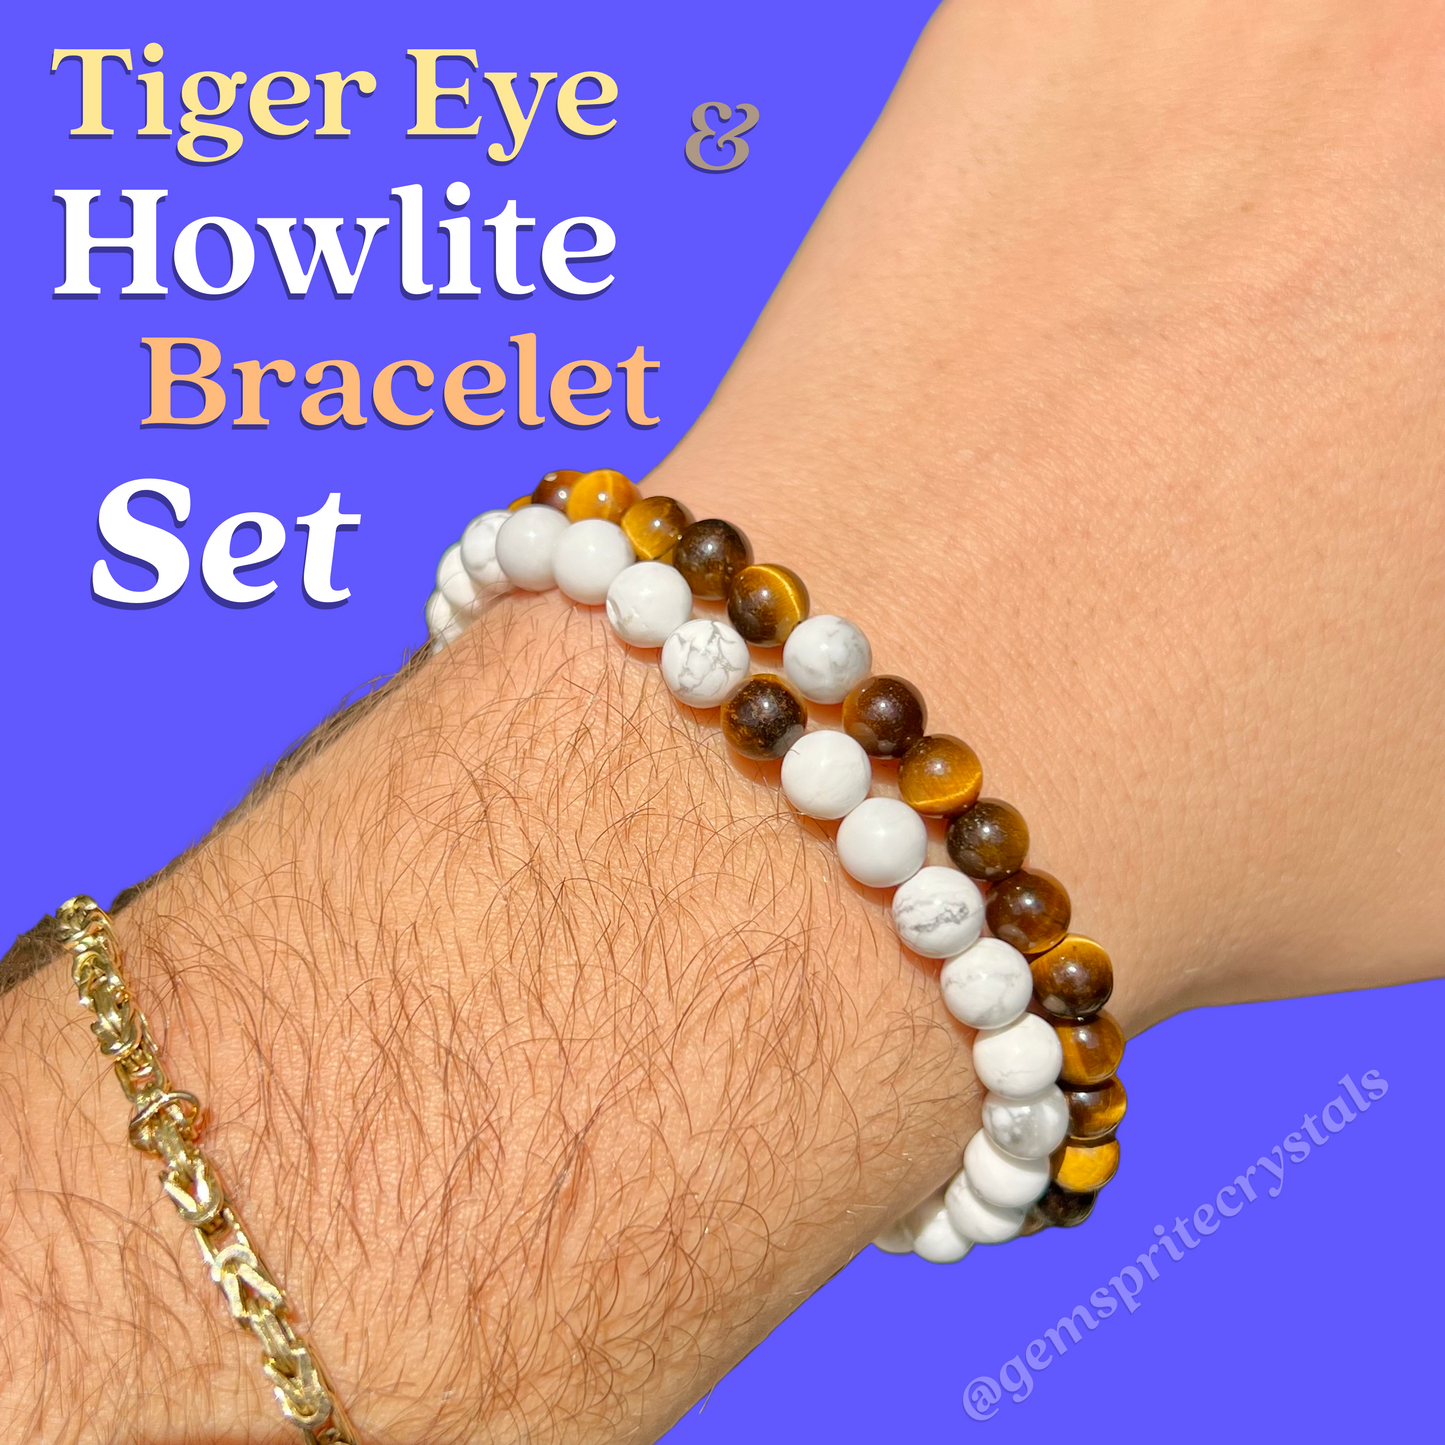 Tiger Eye & Howlite Bracelet Set